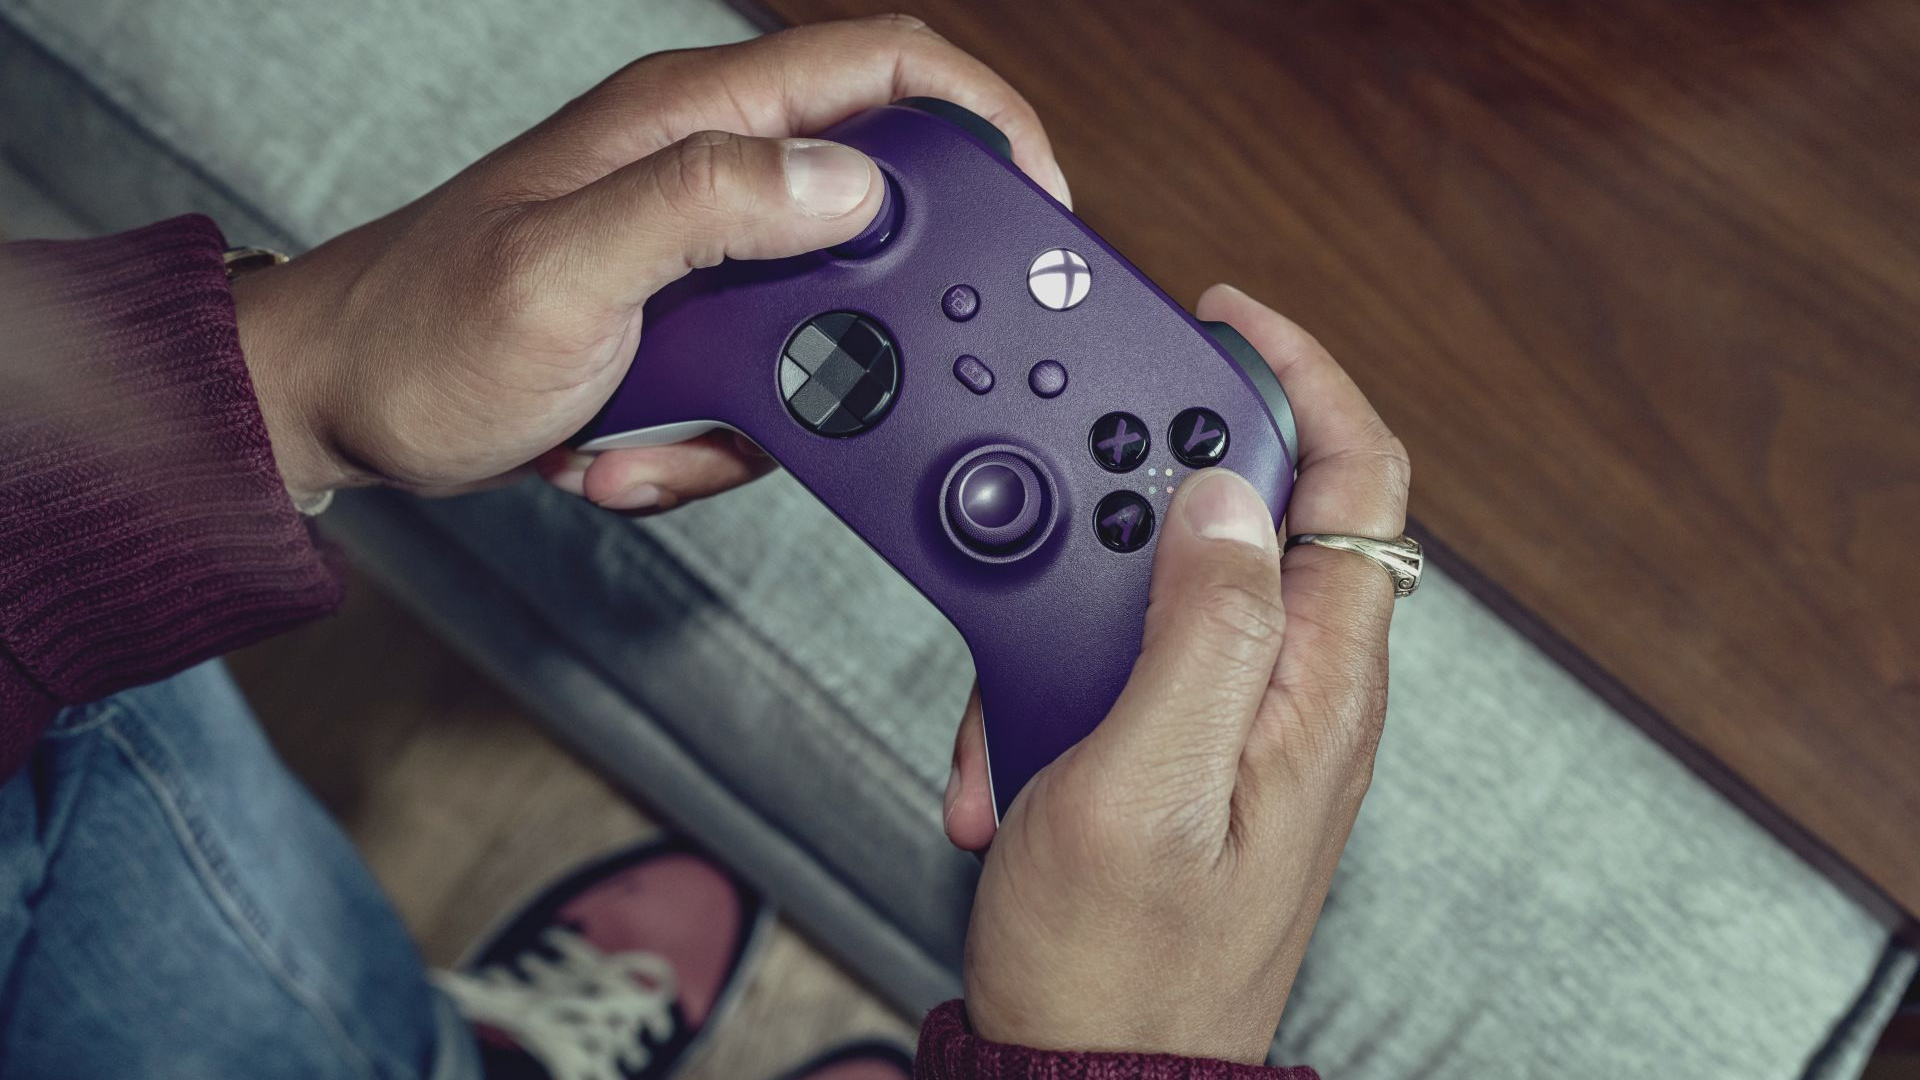 Microsoft Manette Xbox sans fil Astral Purple